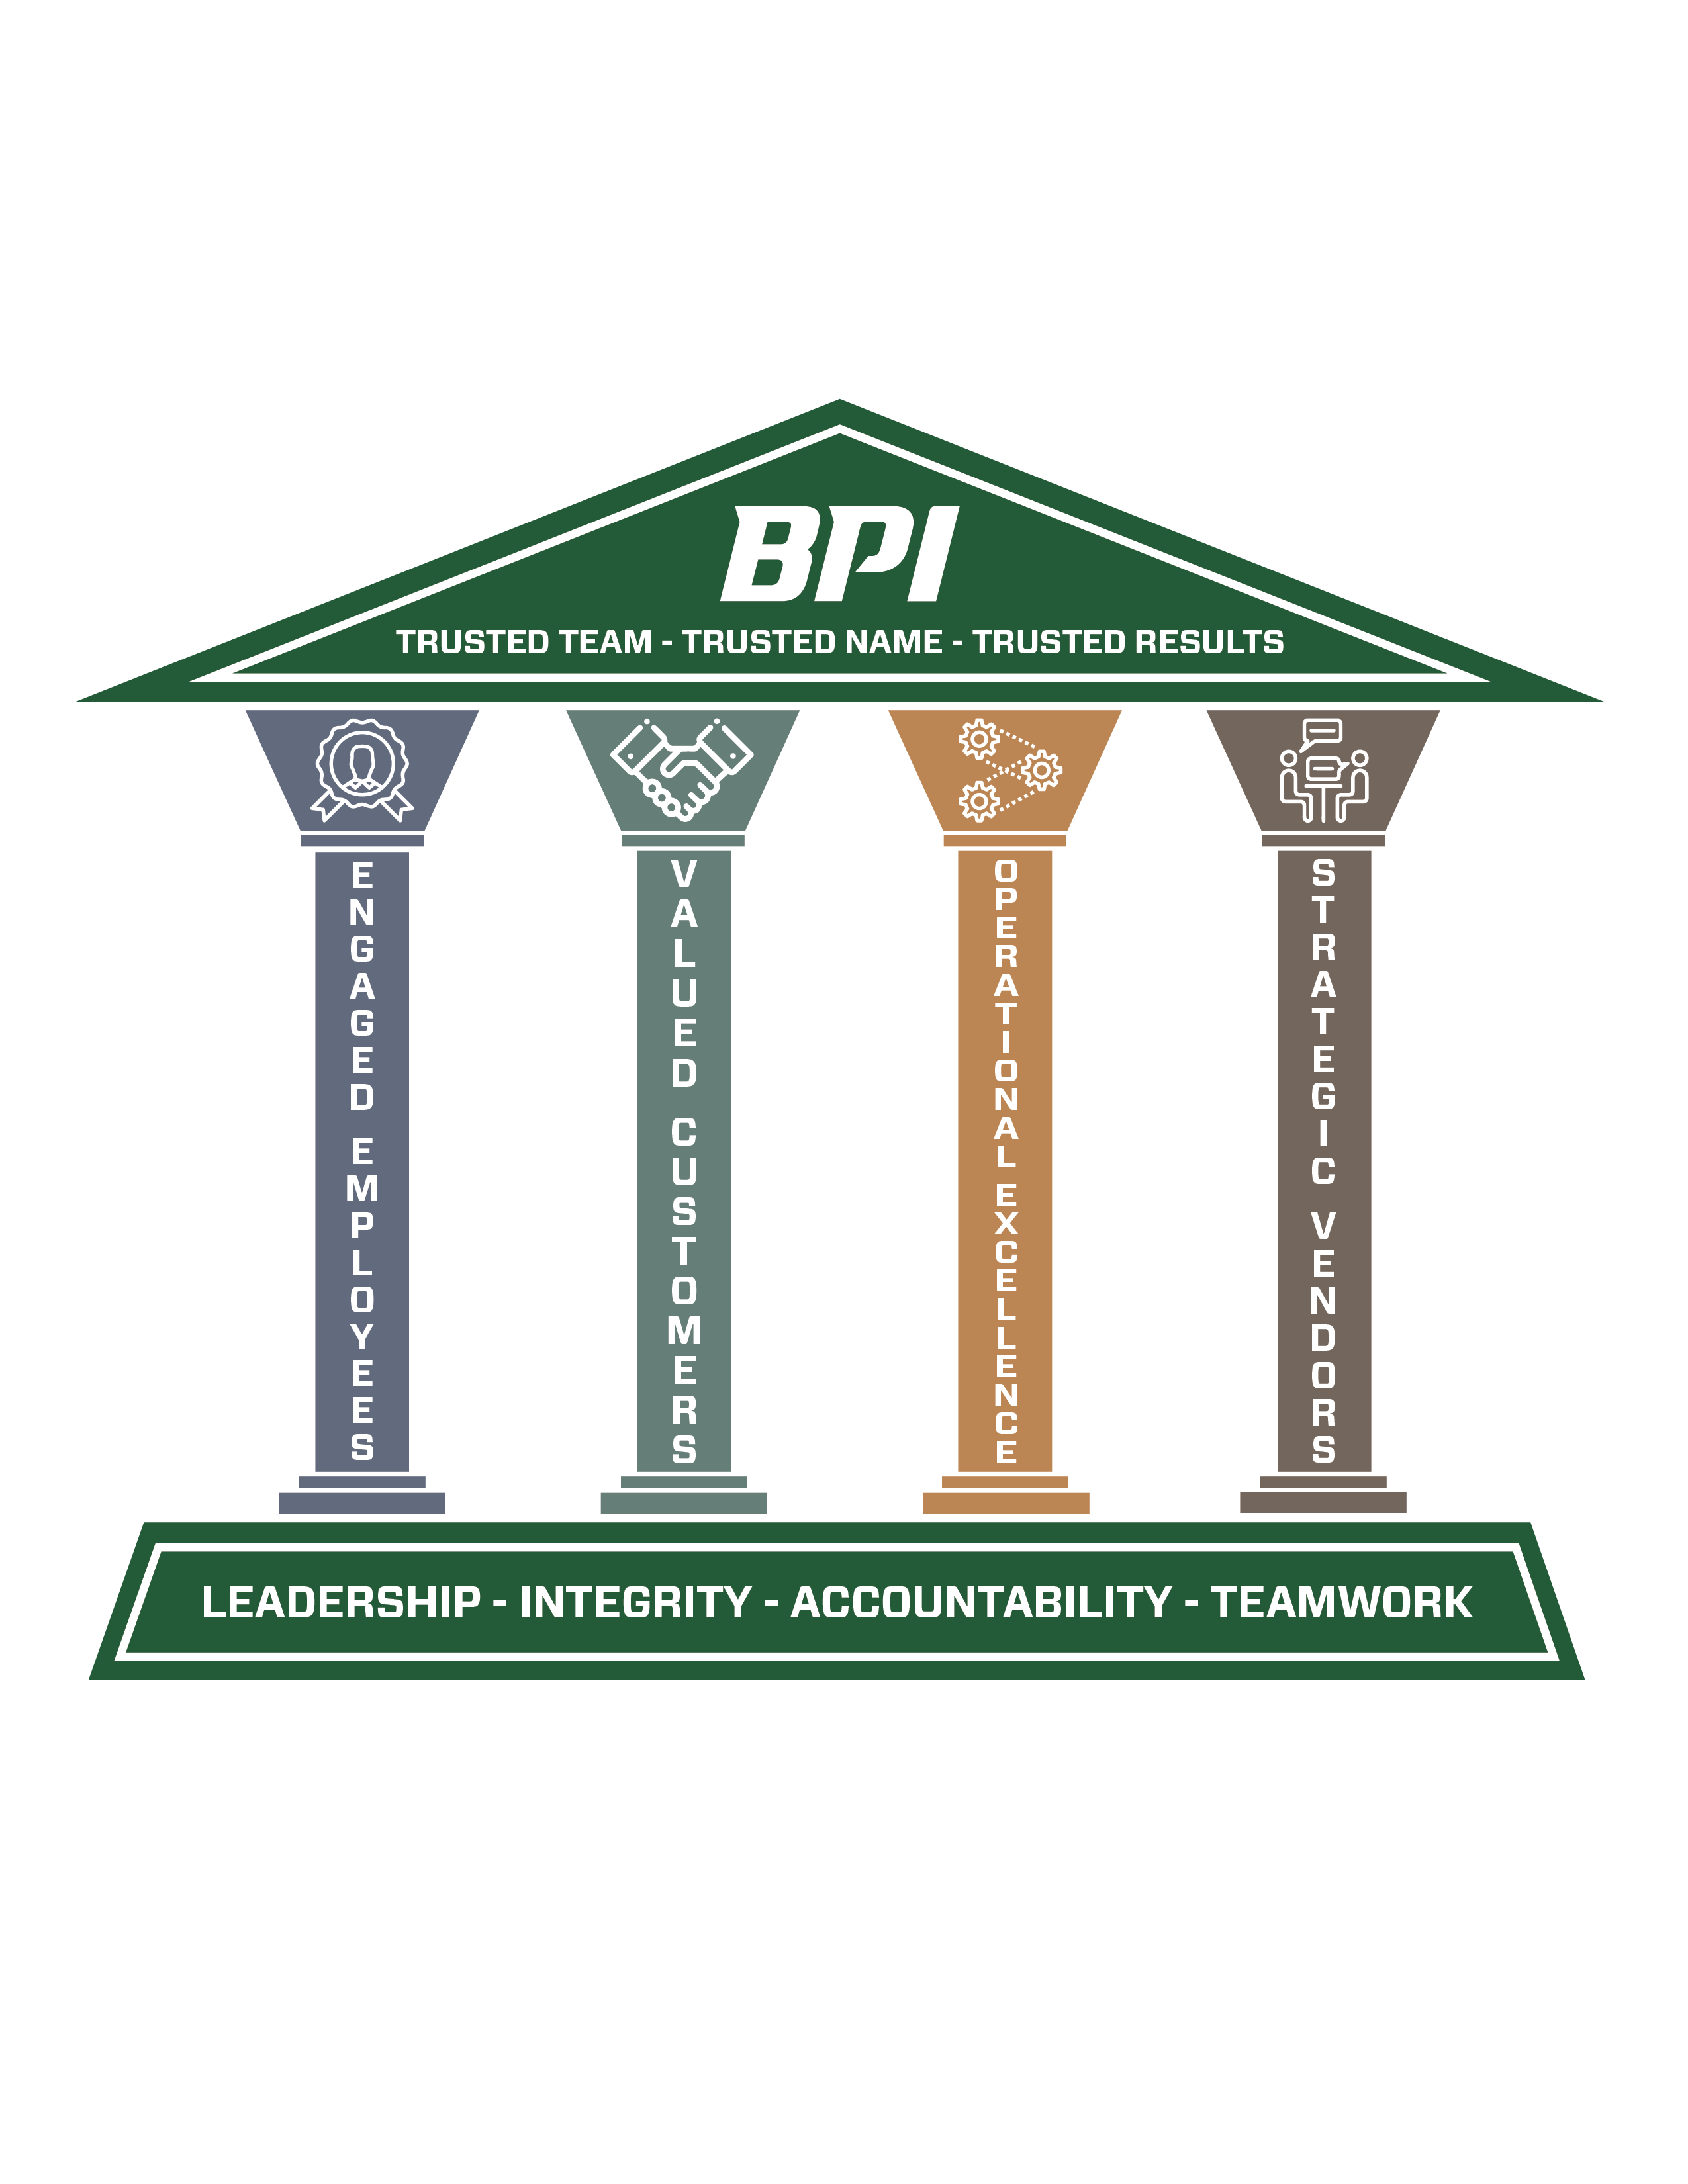 BPI 4 main pillars are leadership, integrity, accountability, and teamwork